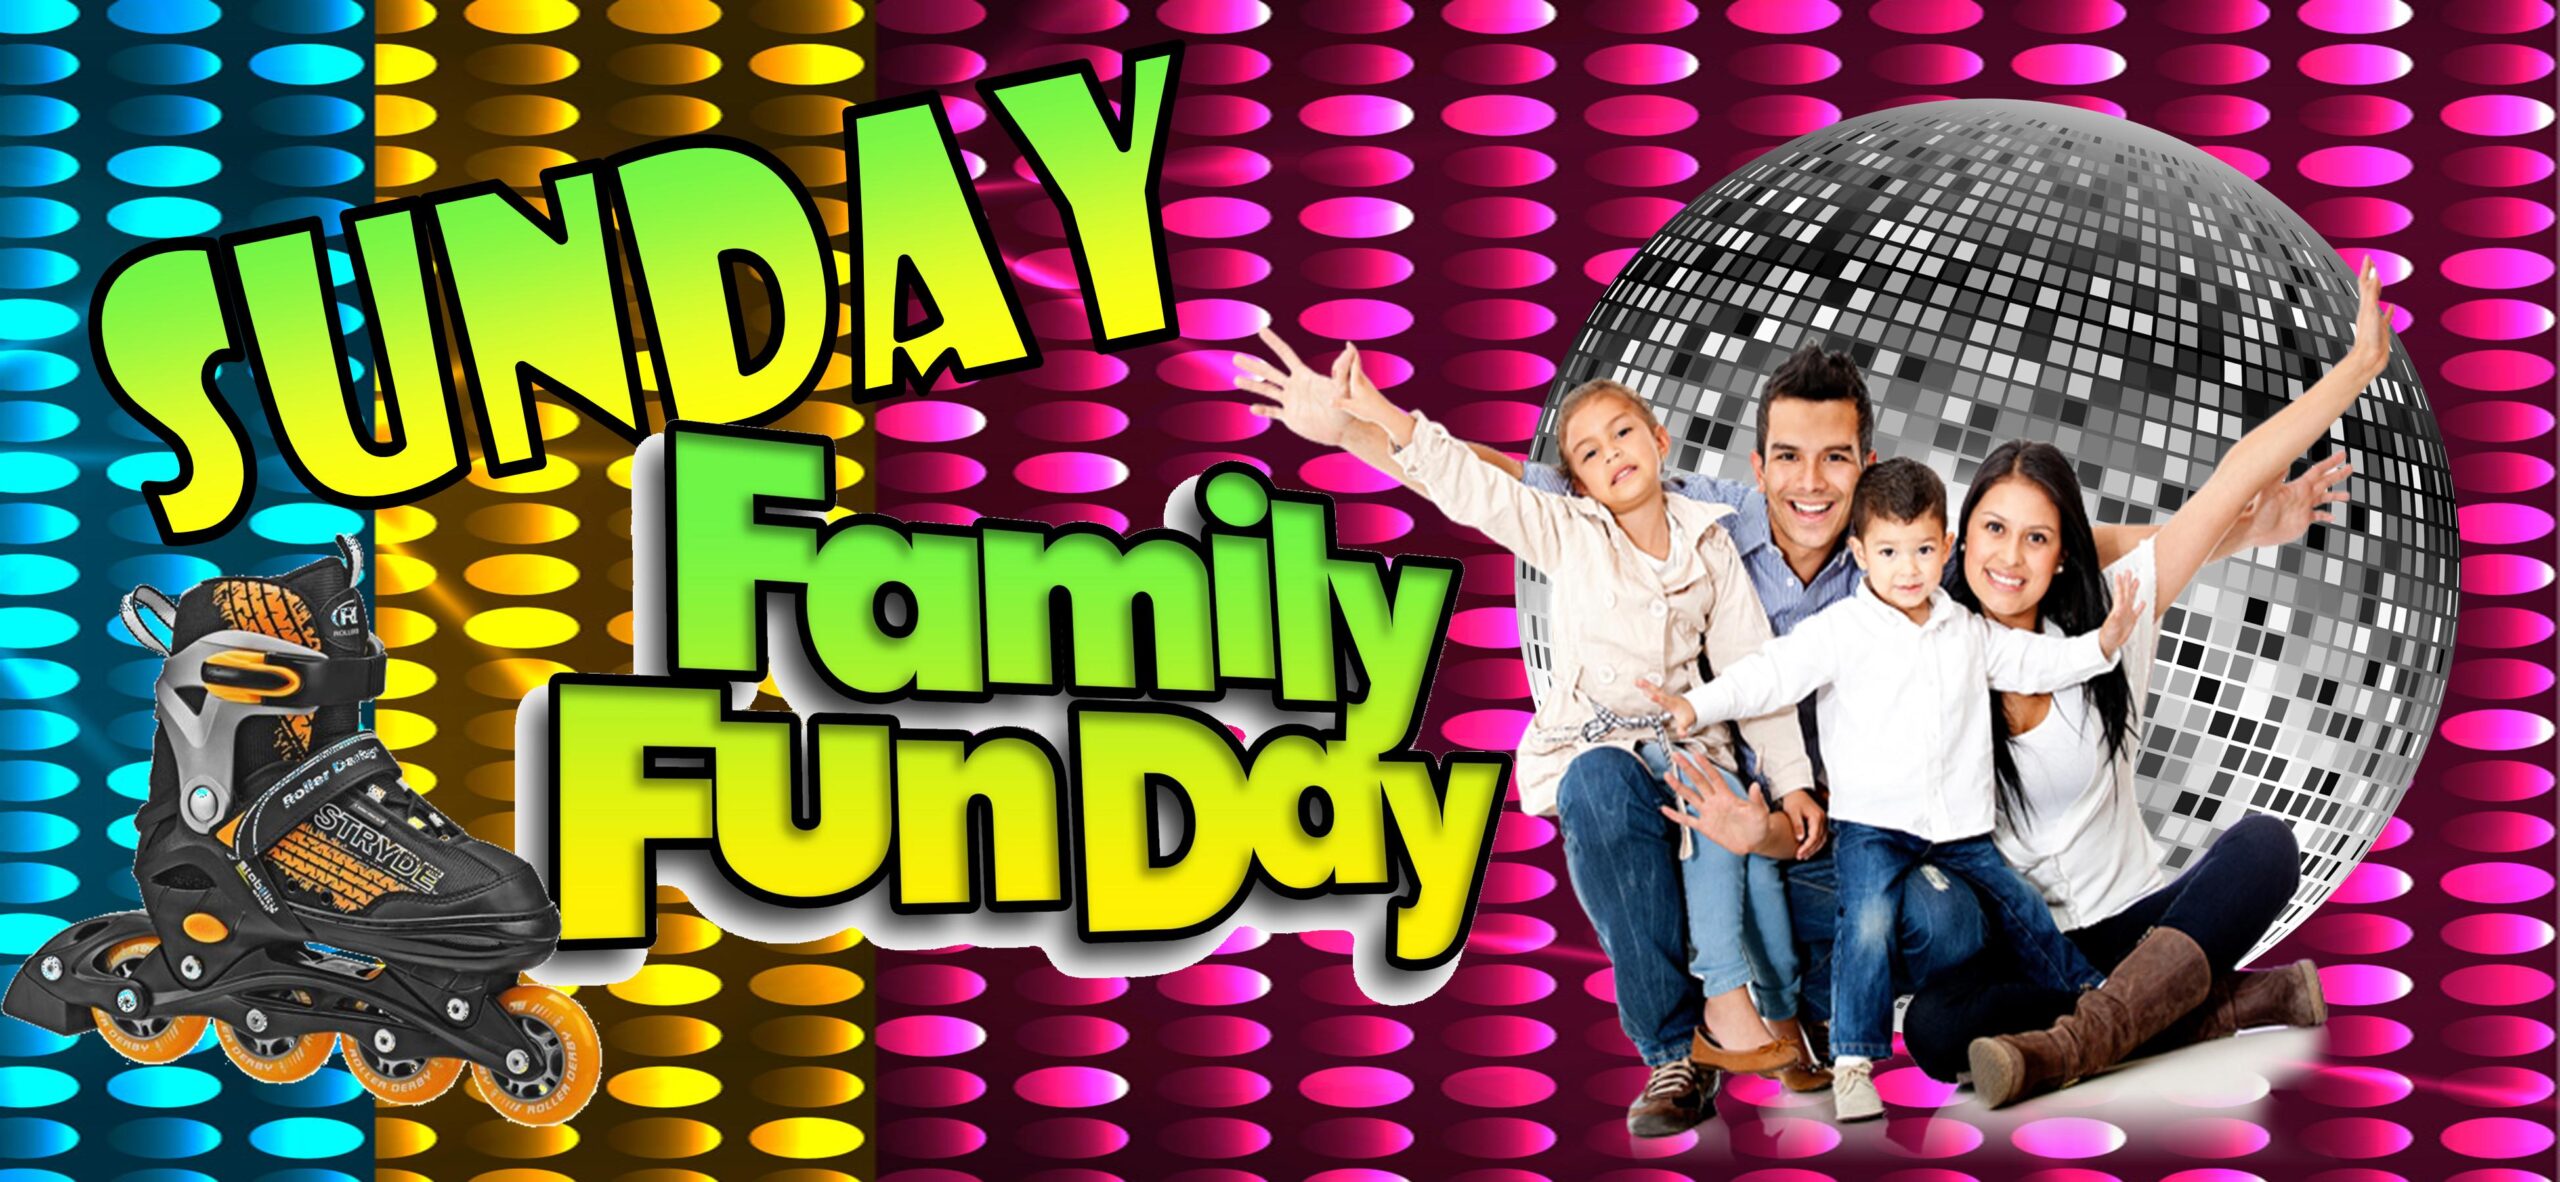 Sunday Family Funday banner